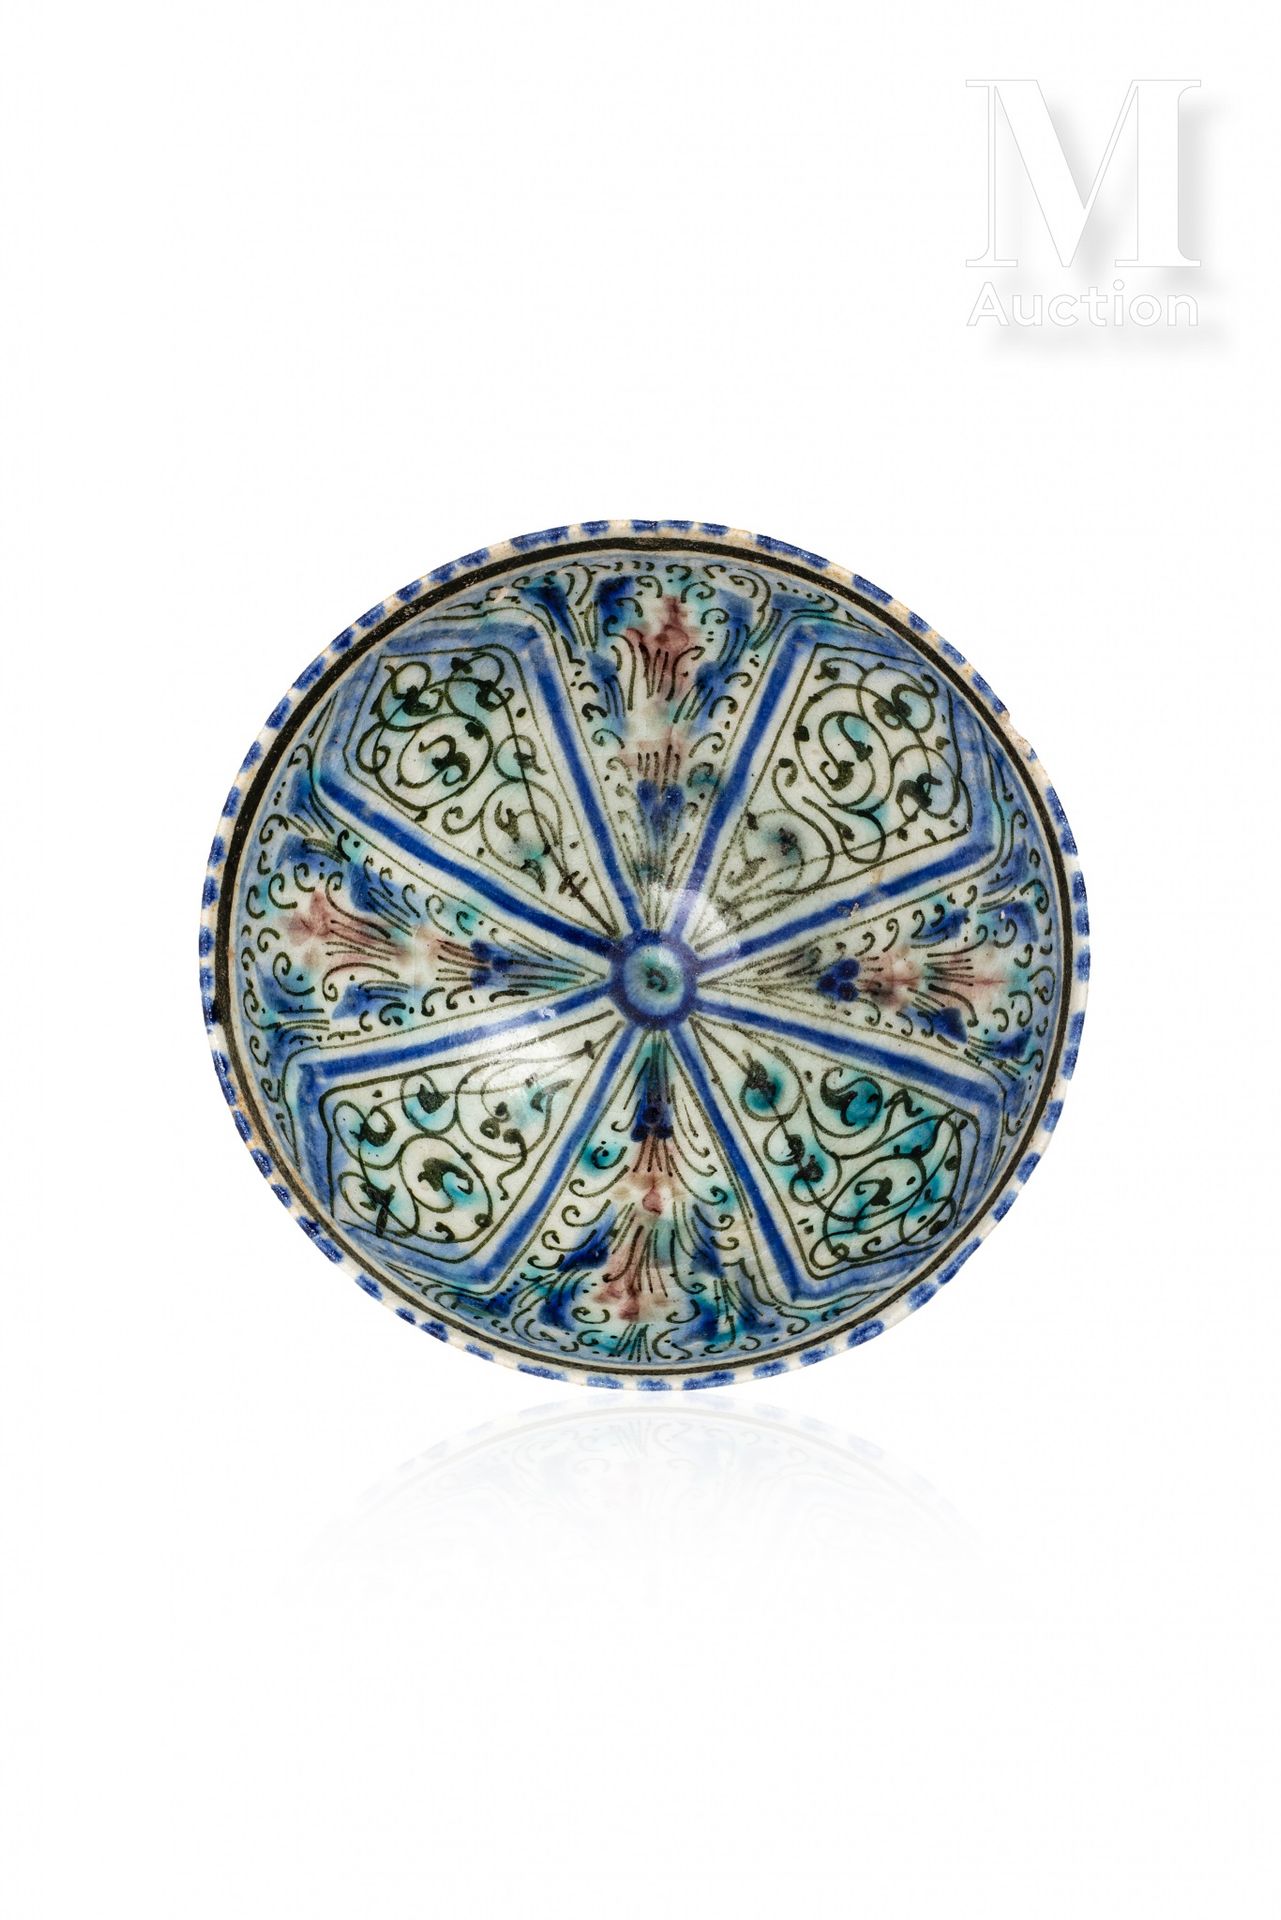 Coupe ilkhanide Irán, Sultanabad, siglo XIV

Cuenco con pedestal de cerámica sil&hellip;